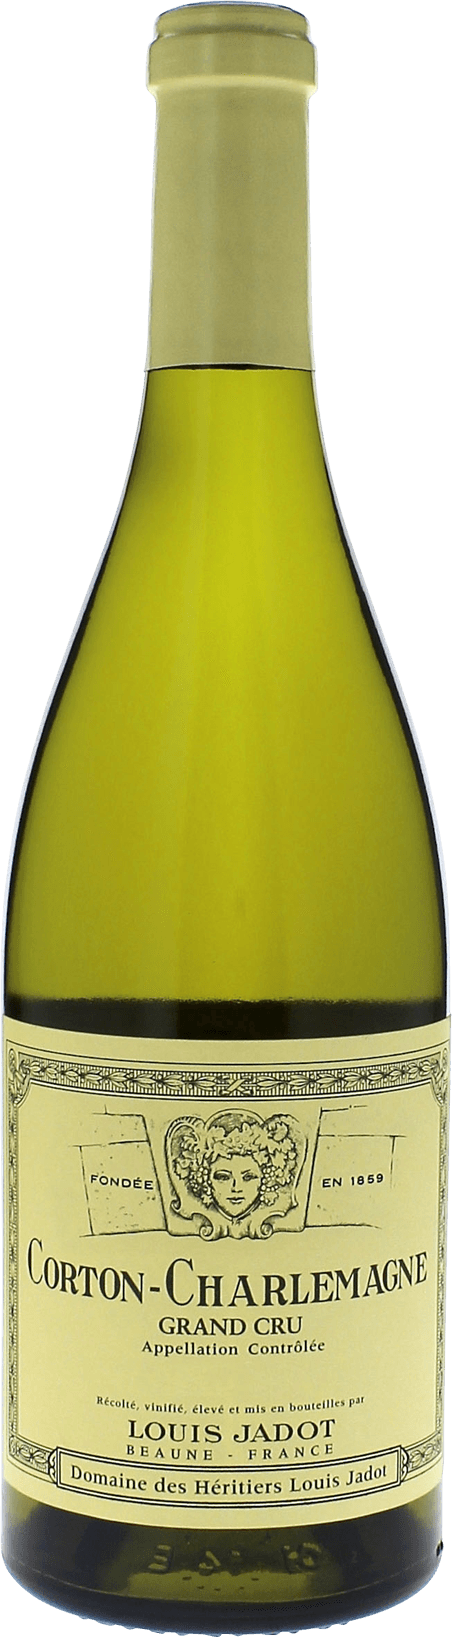 Corton charlemagne grand cru 2017  Jadot Louis, Bourgogne blanc